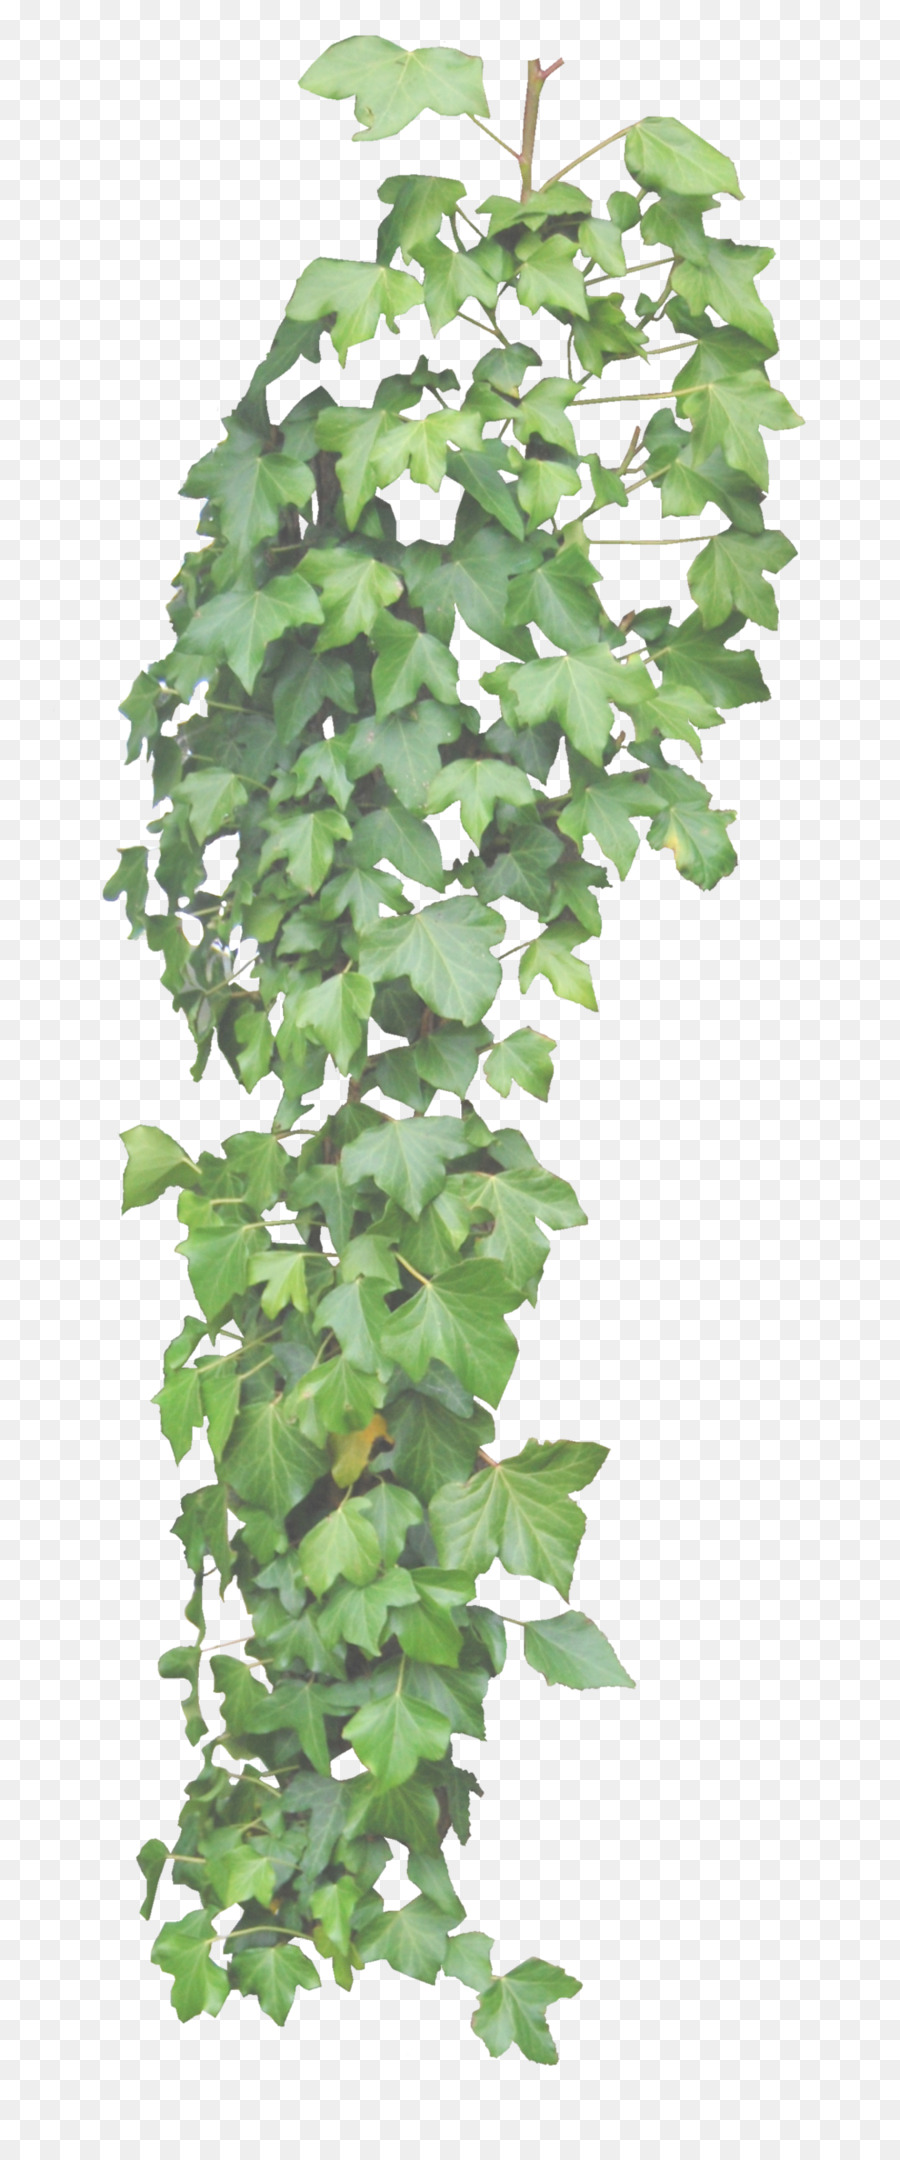 Common ivy Vine Plant DeviantArt - ivy png download - 1024*2454 - Free Transparent Common Ivy png Download.